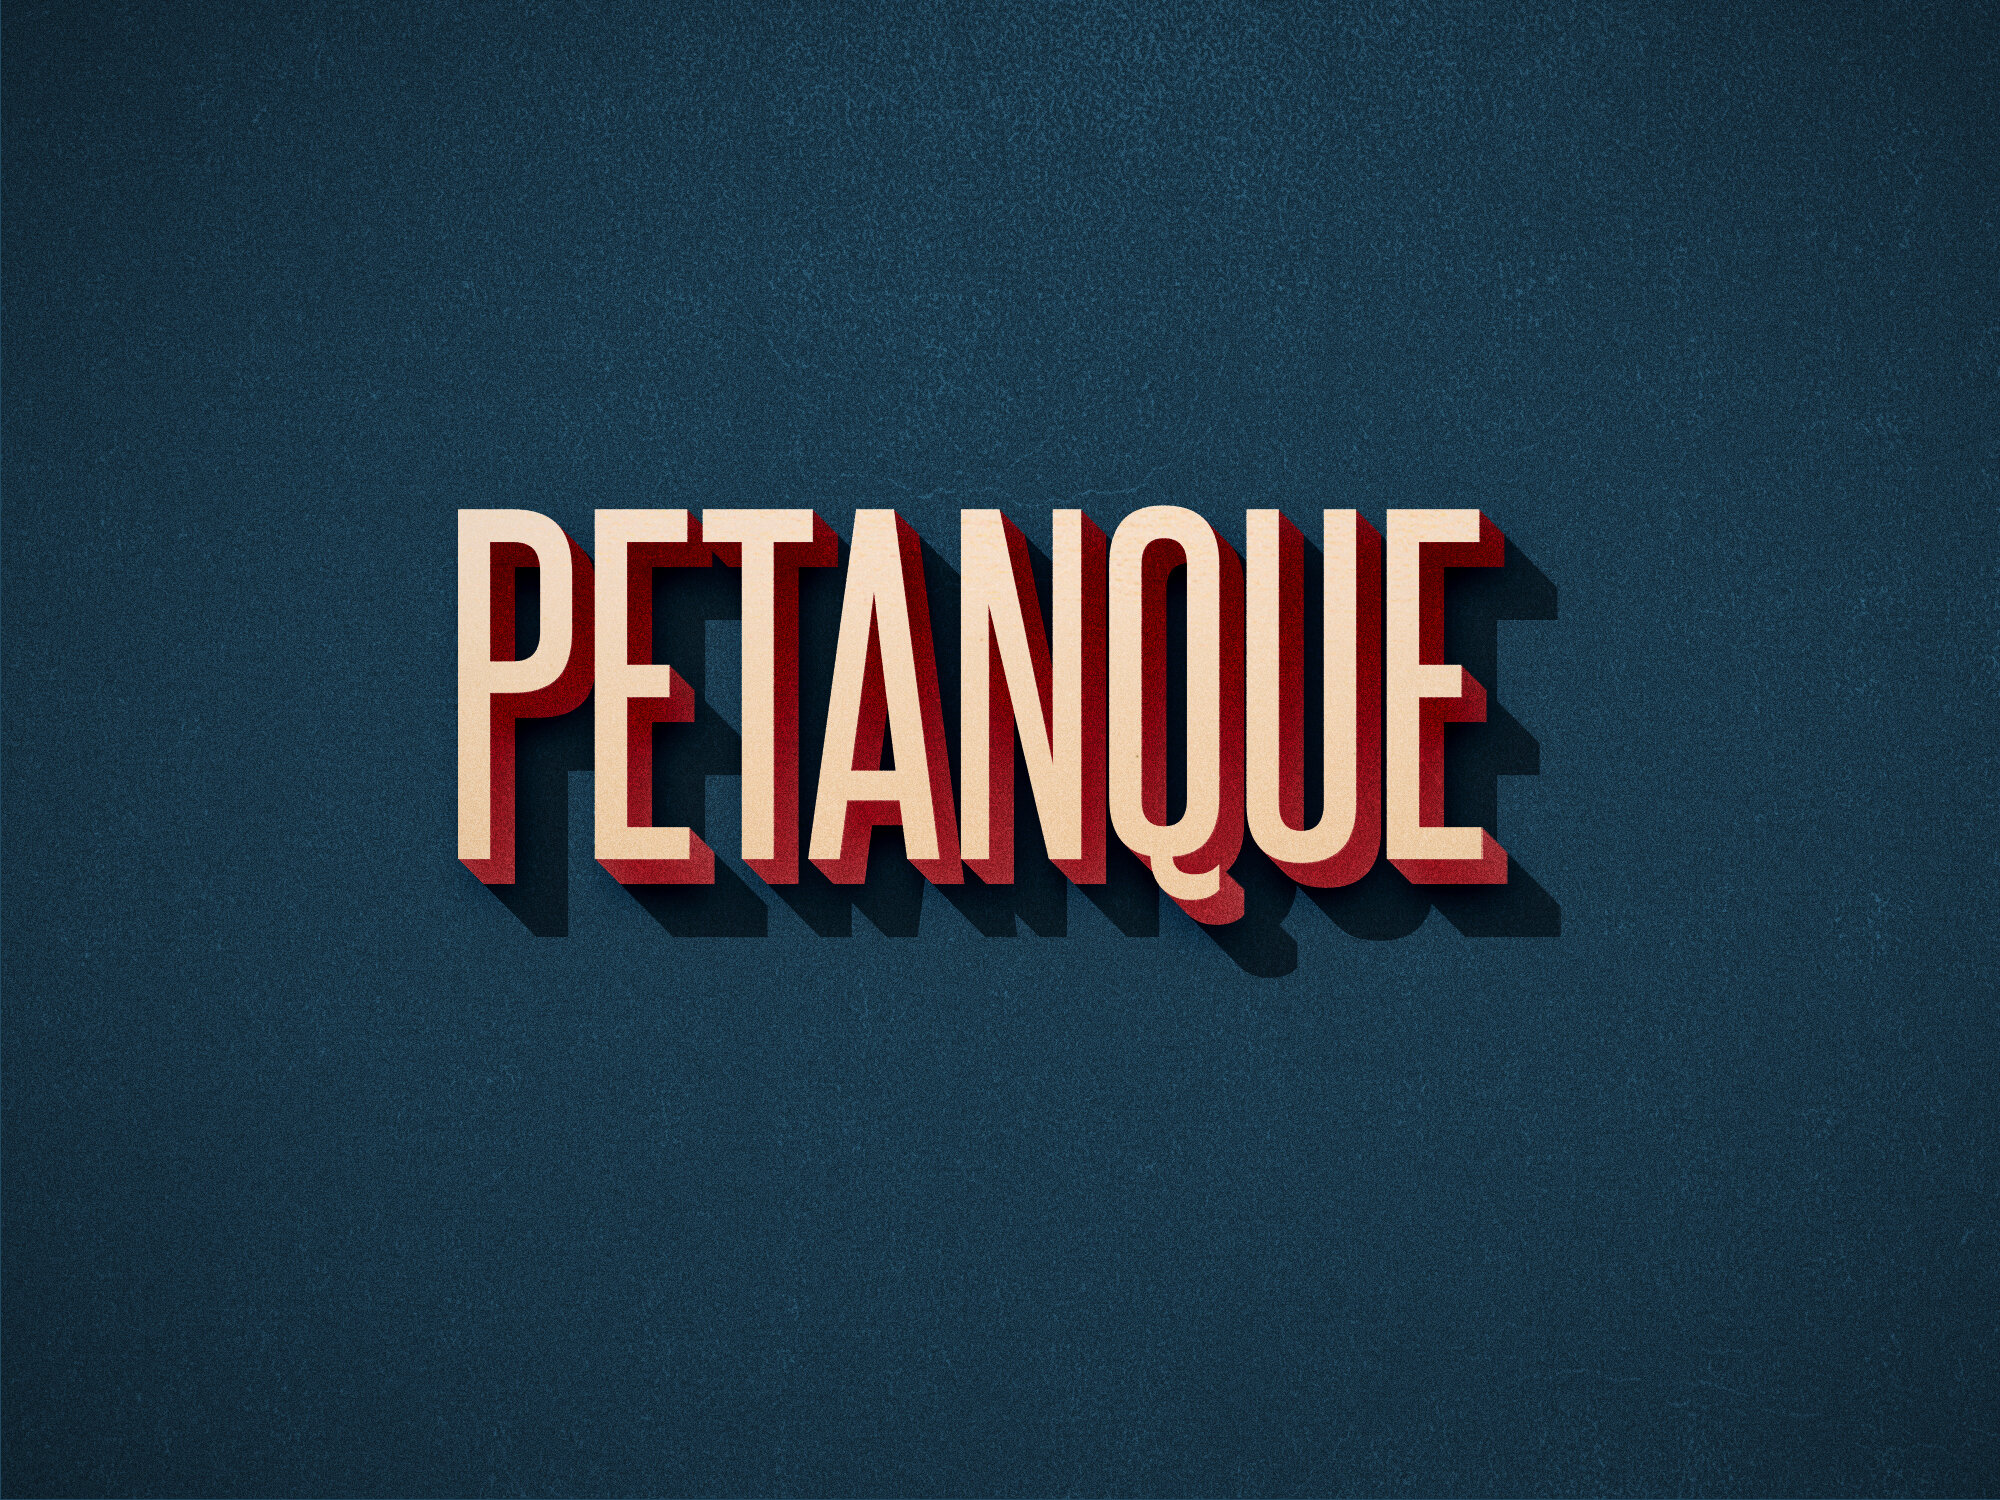 Retro Petanque.jpg